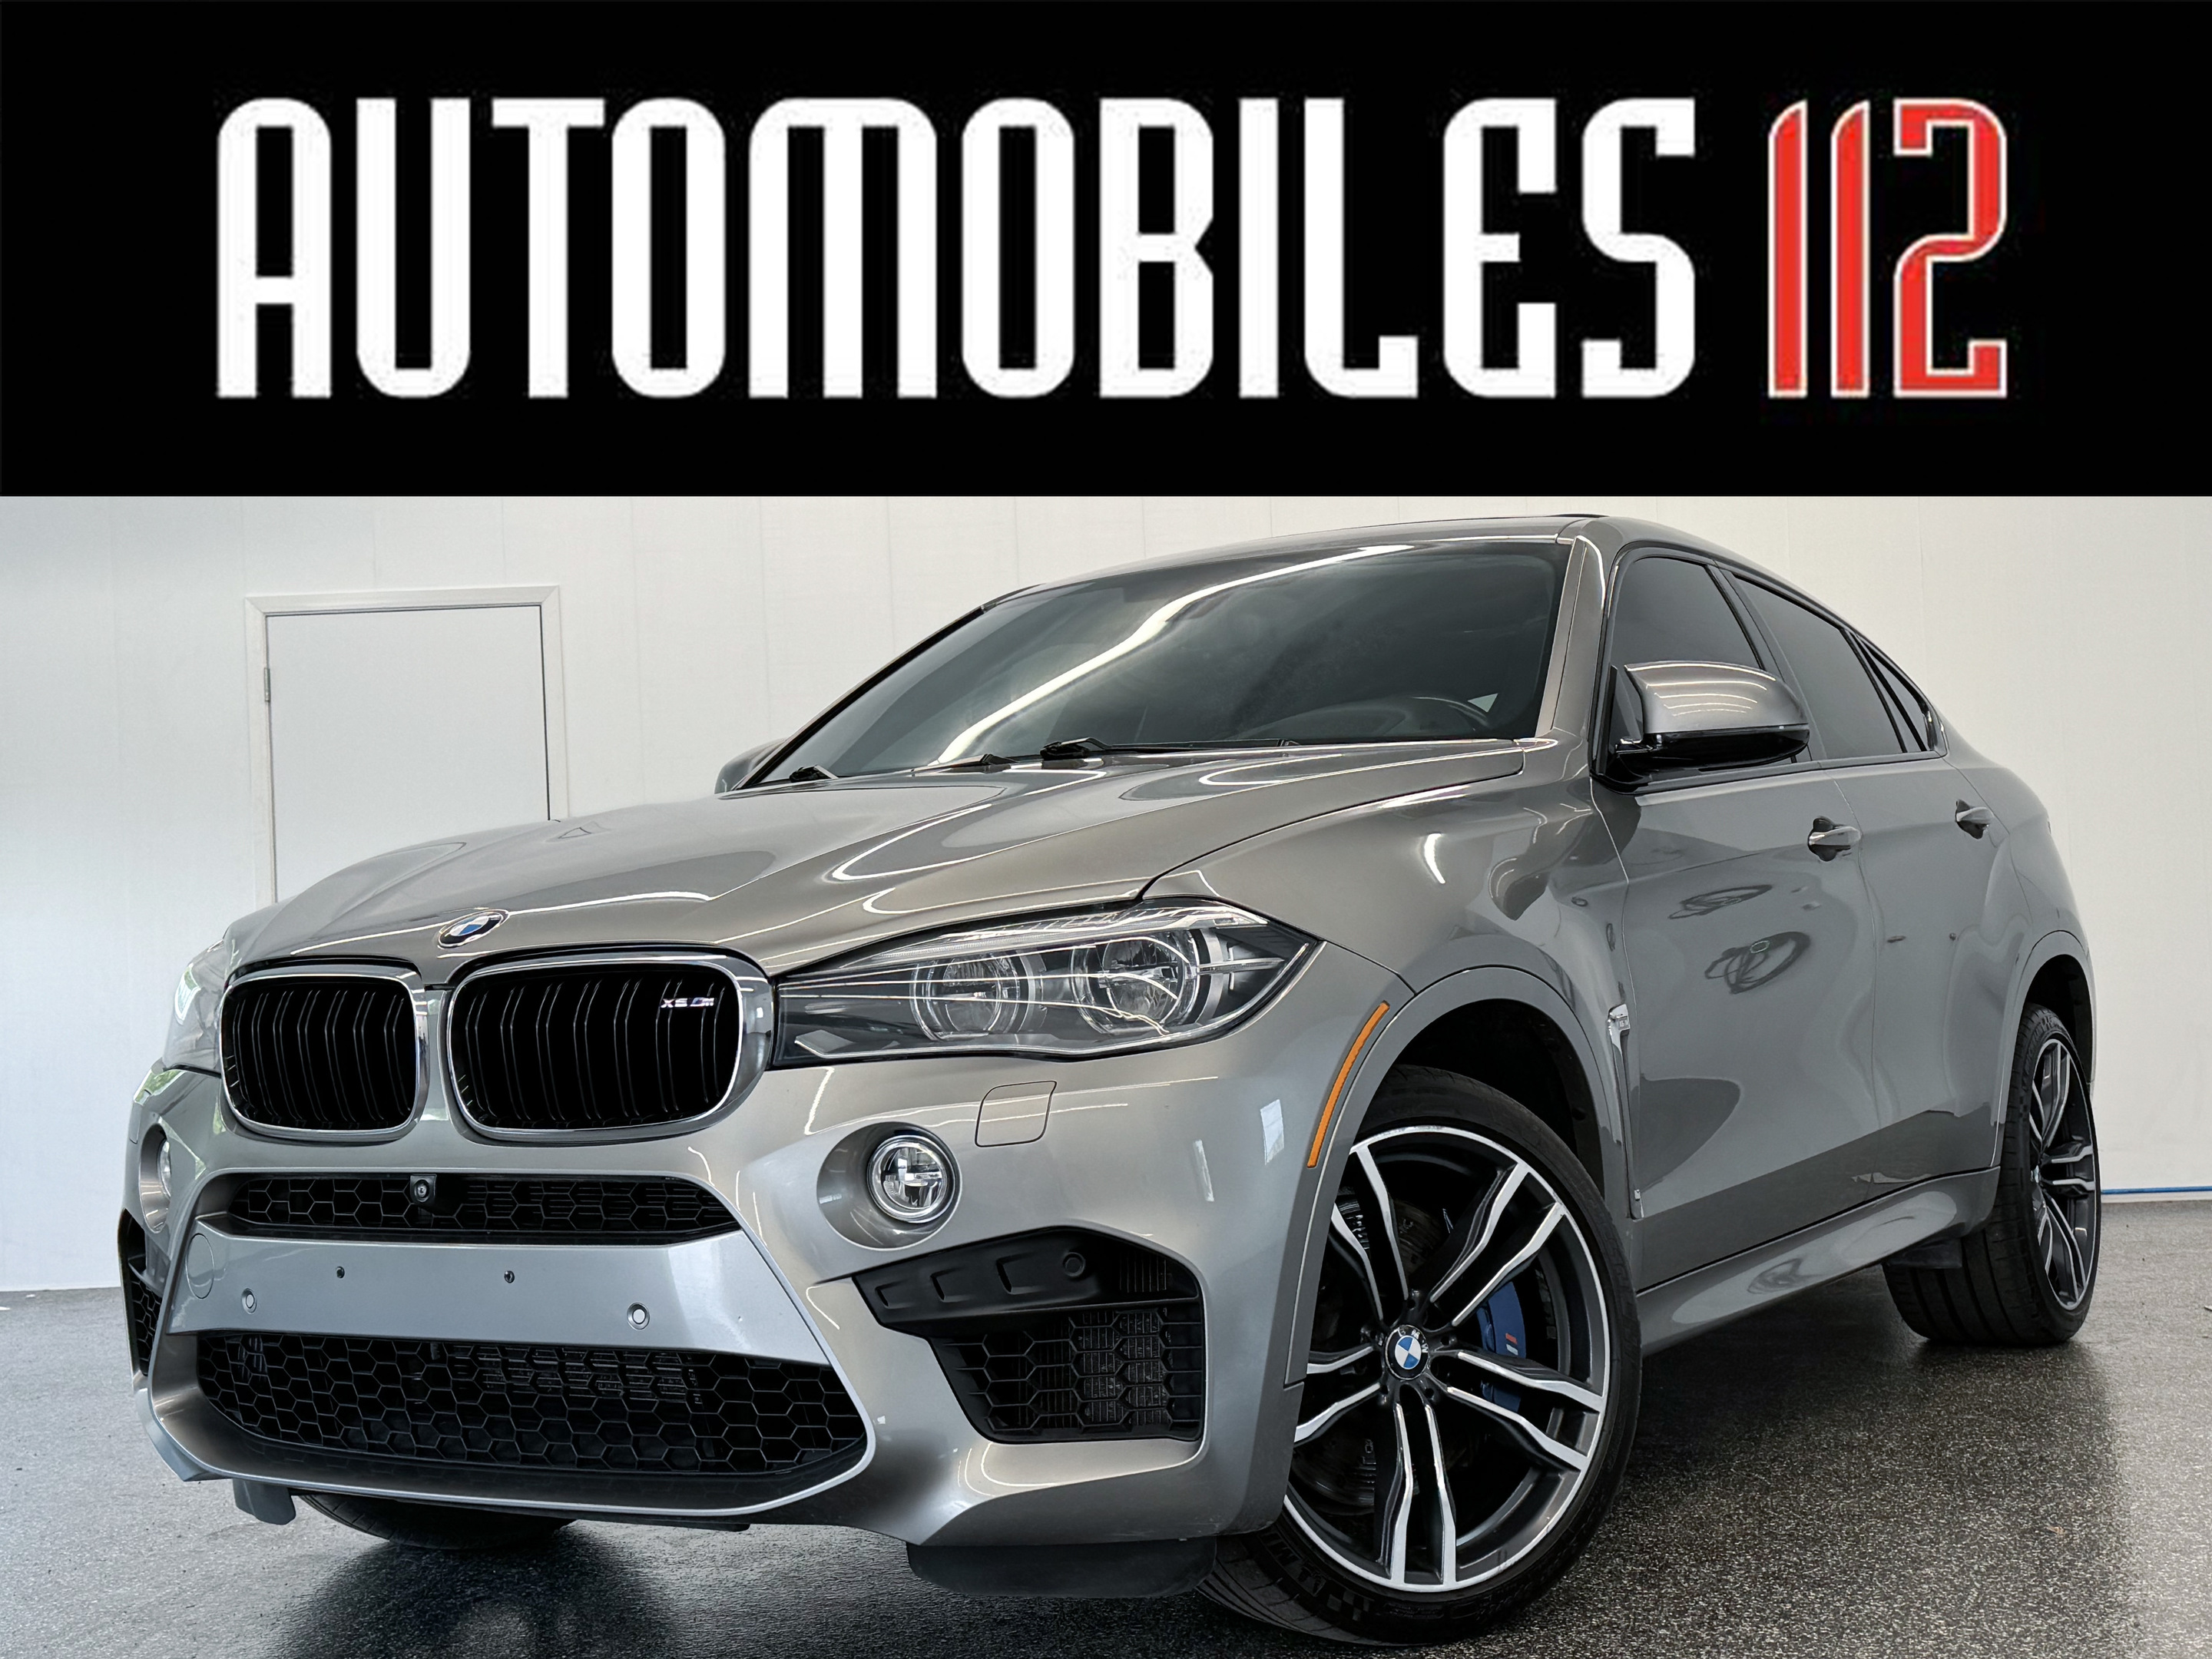 2016 BMW X6 M AWD | 567HP | 21" Wheels | Carbon